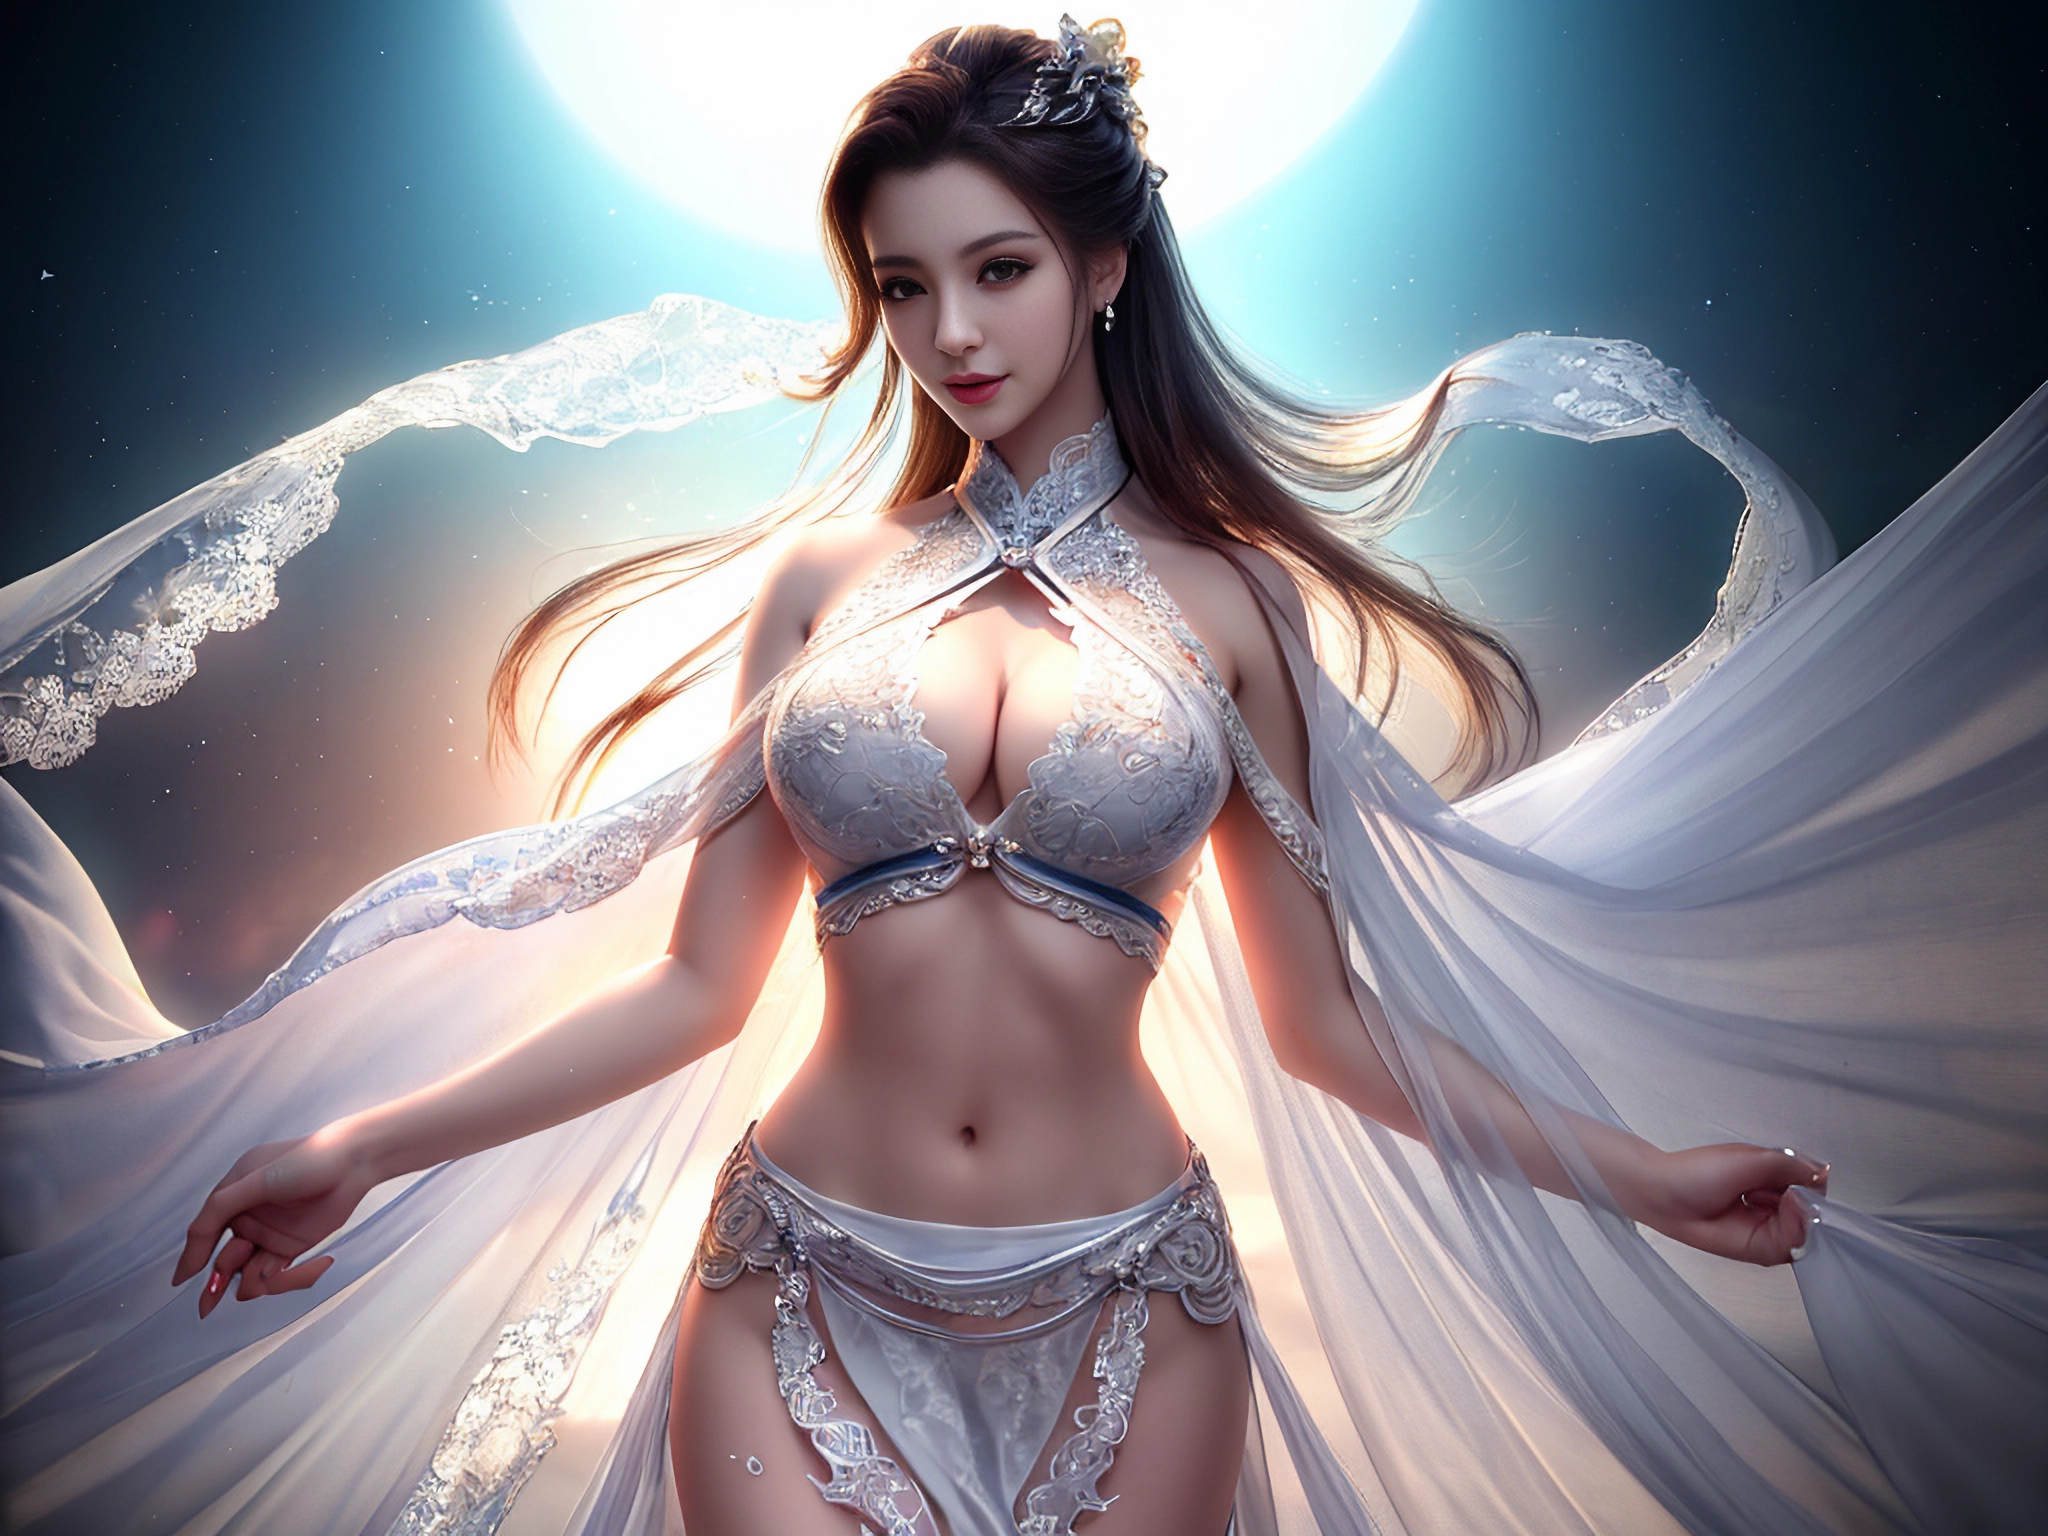 General 2048x1536 AI art white dress hair   women lace lingerie lace underwear dress hair blowing in the wind Moon Side